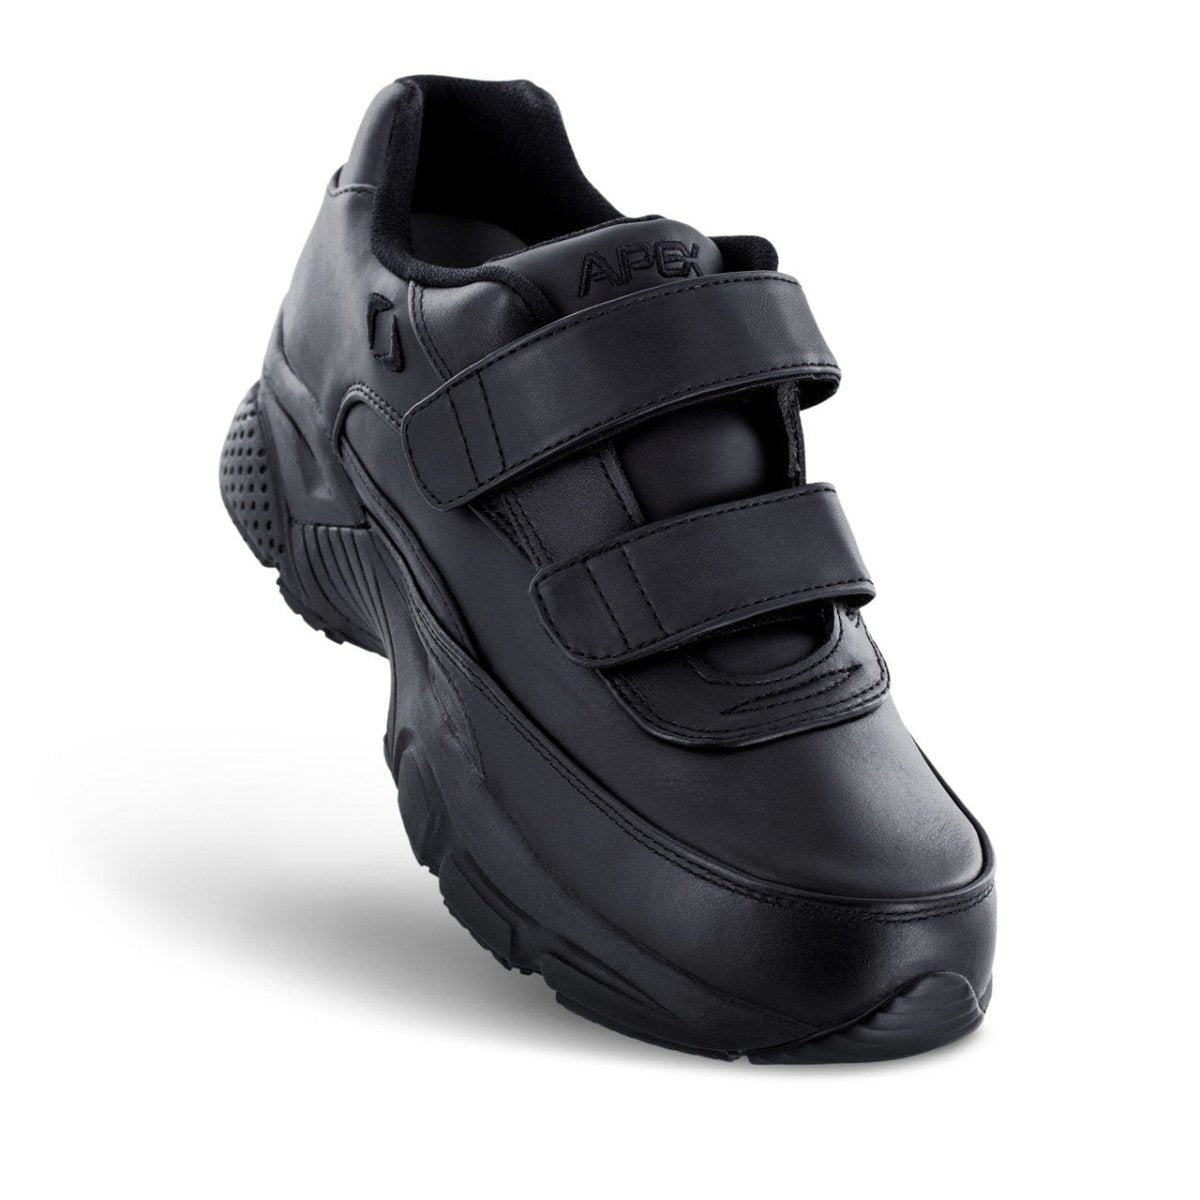 APEX X920M STRAP DBL VELCRO WALK MEN'S SHOE IN BLACK. - TLW Shoes